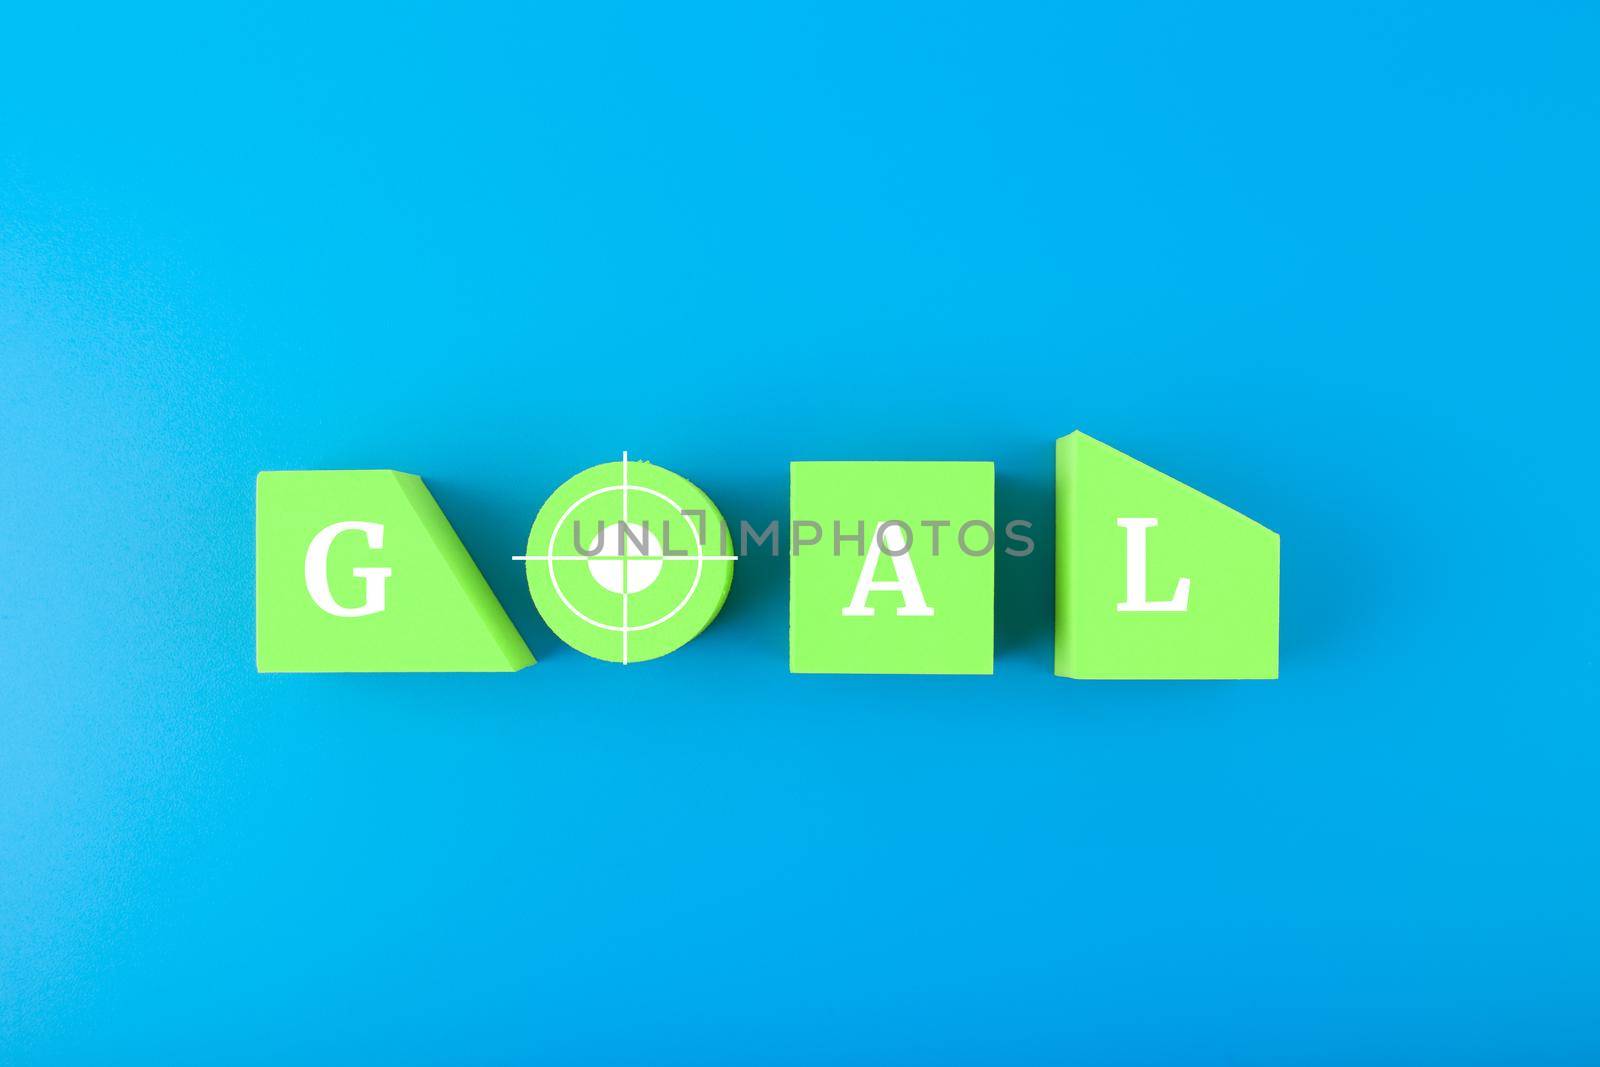 Goal single word written on green geometric figures on blue background by Senorina_Irina